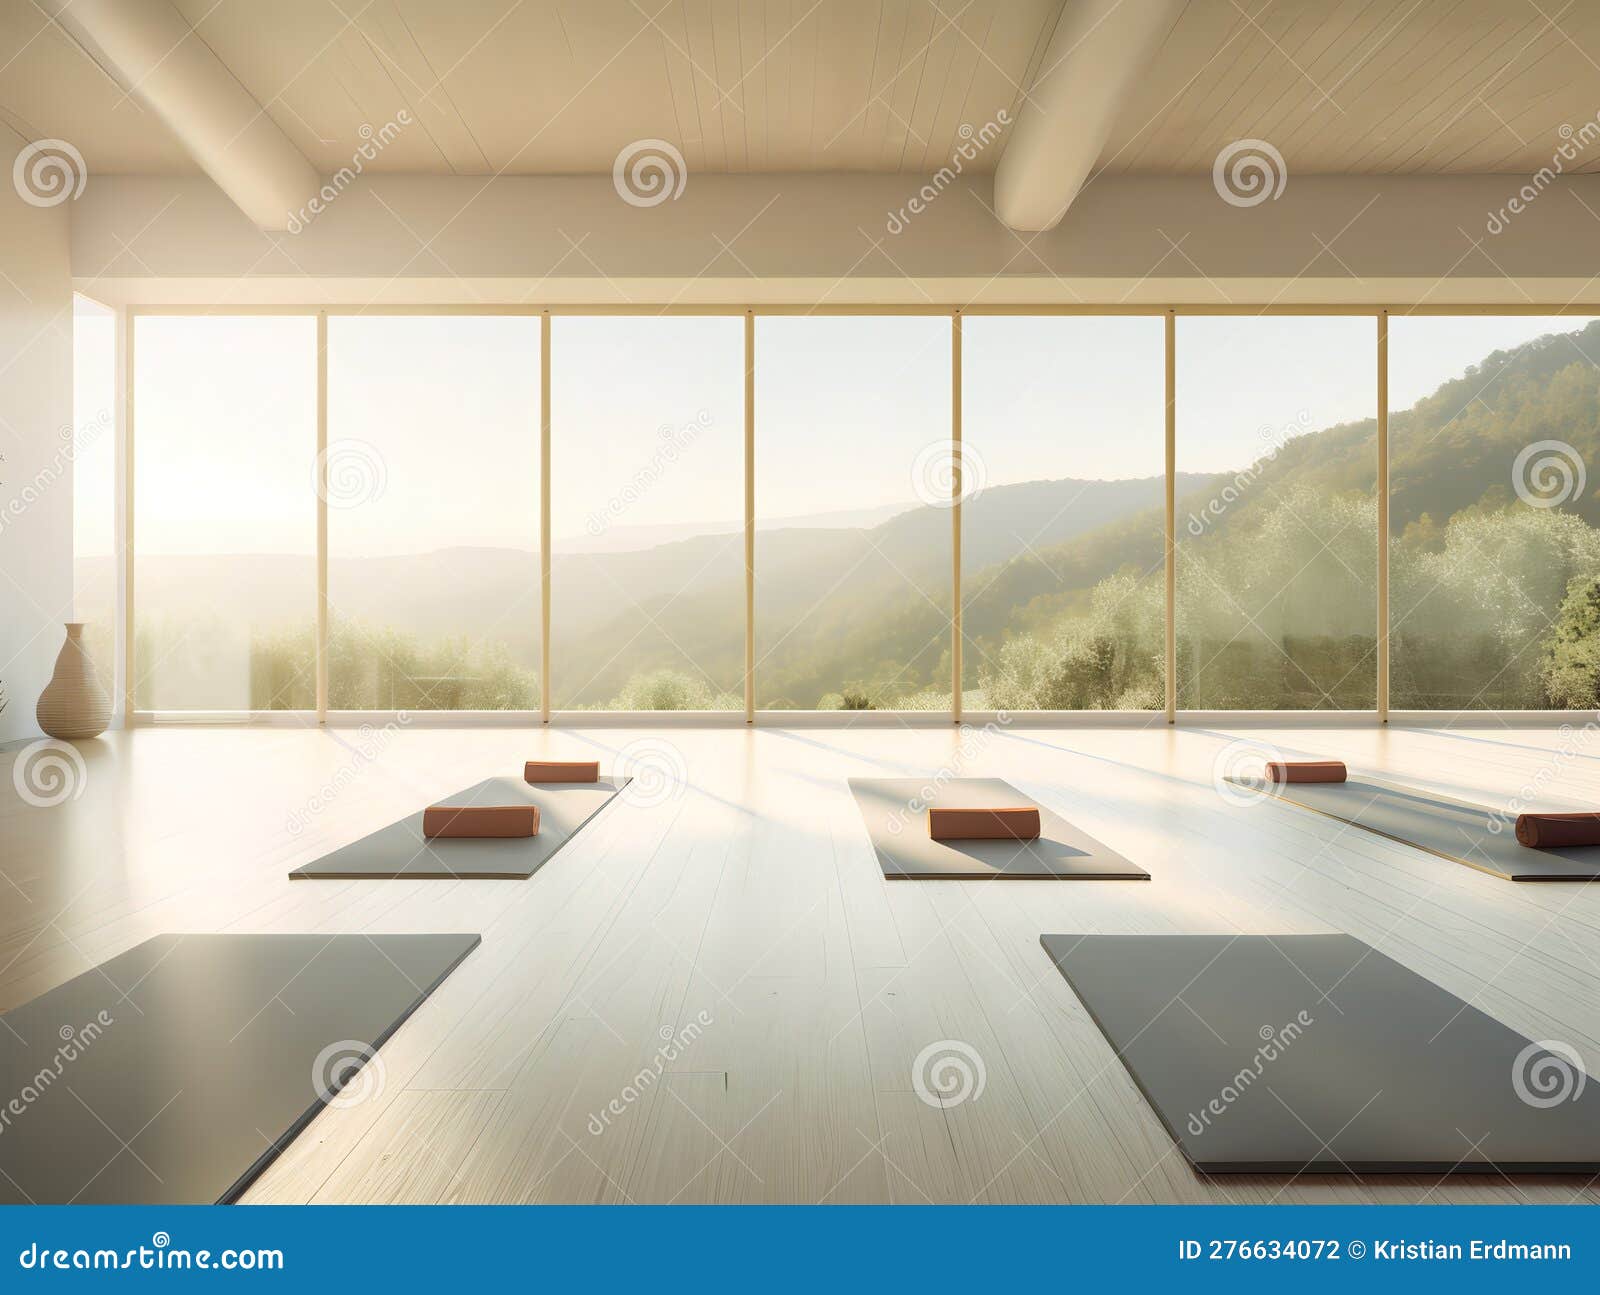 Serene Yoga Studio with Minimalist Interior Design and Sweeping